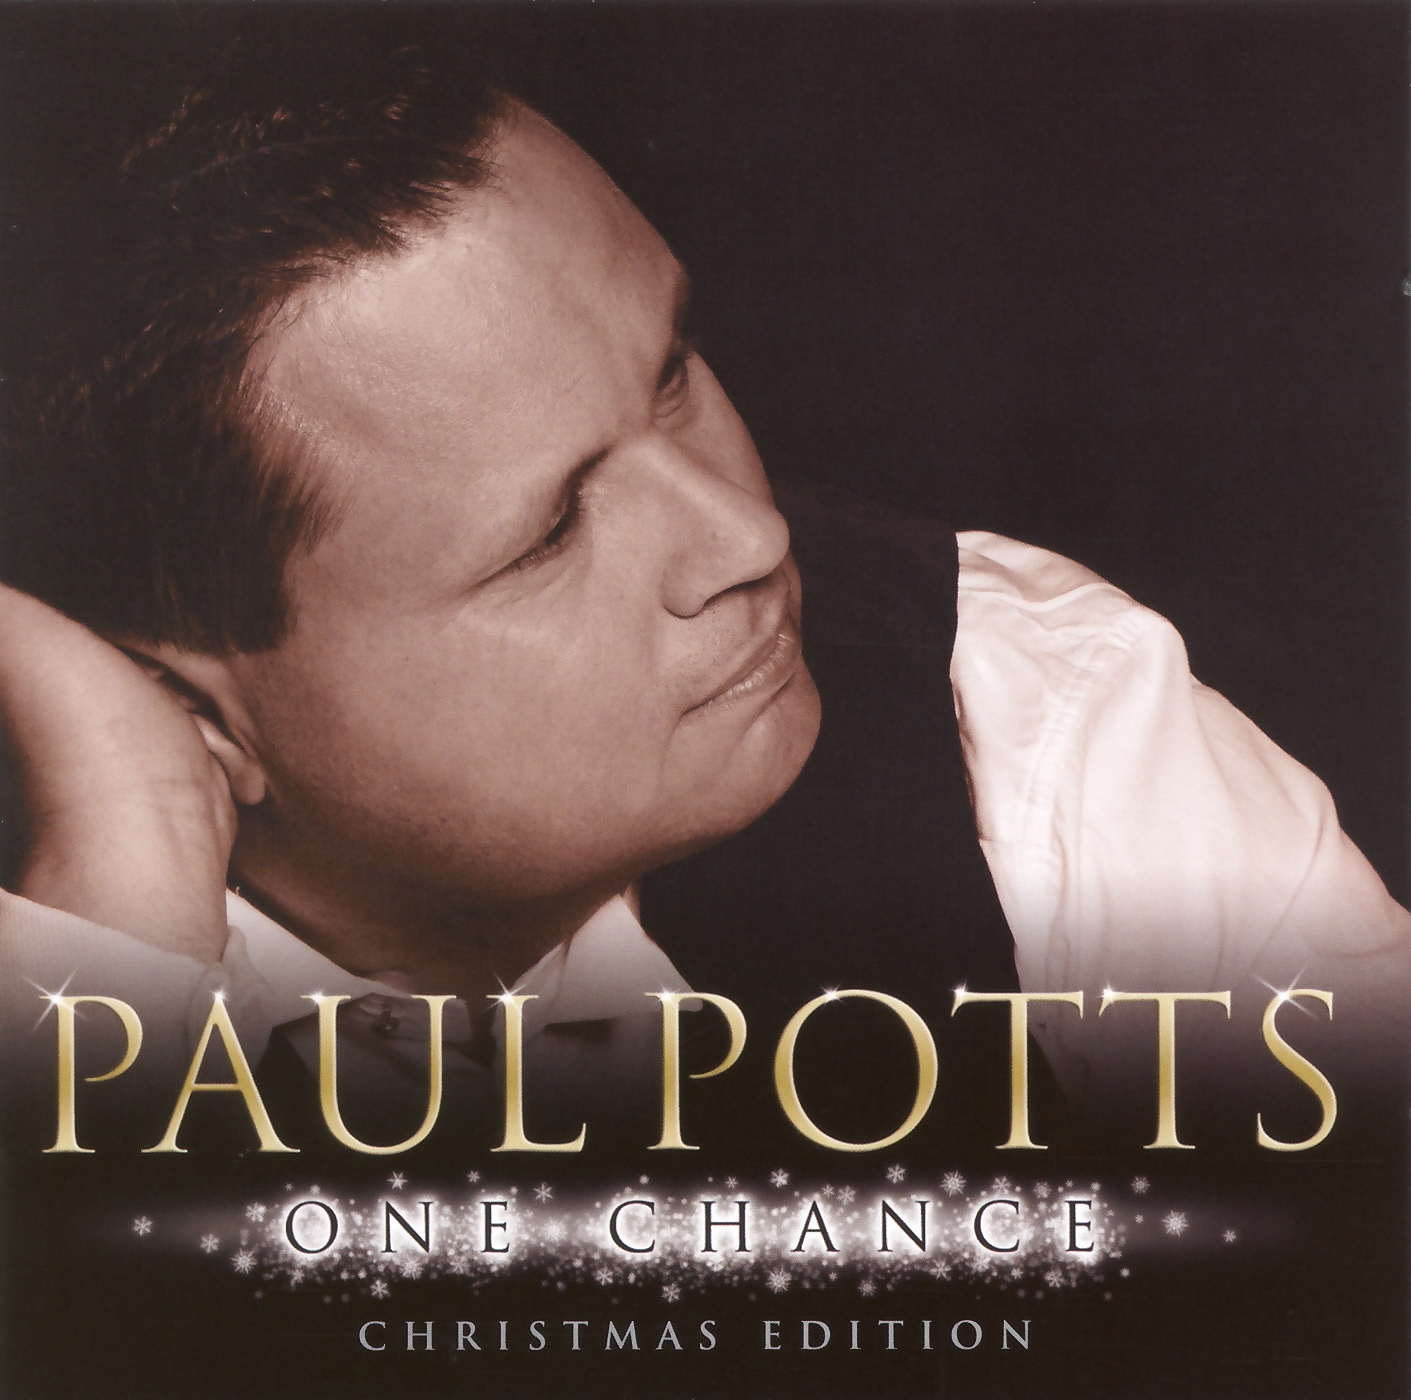 Paul Potts - One Change Christmas Edition